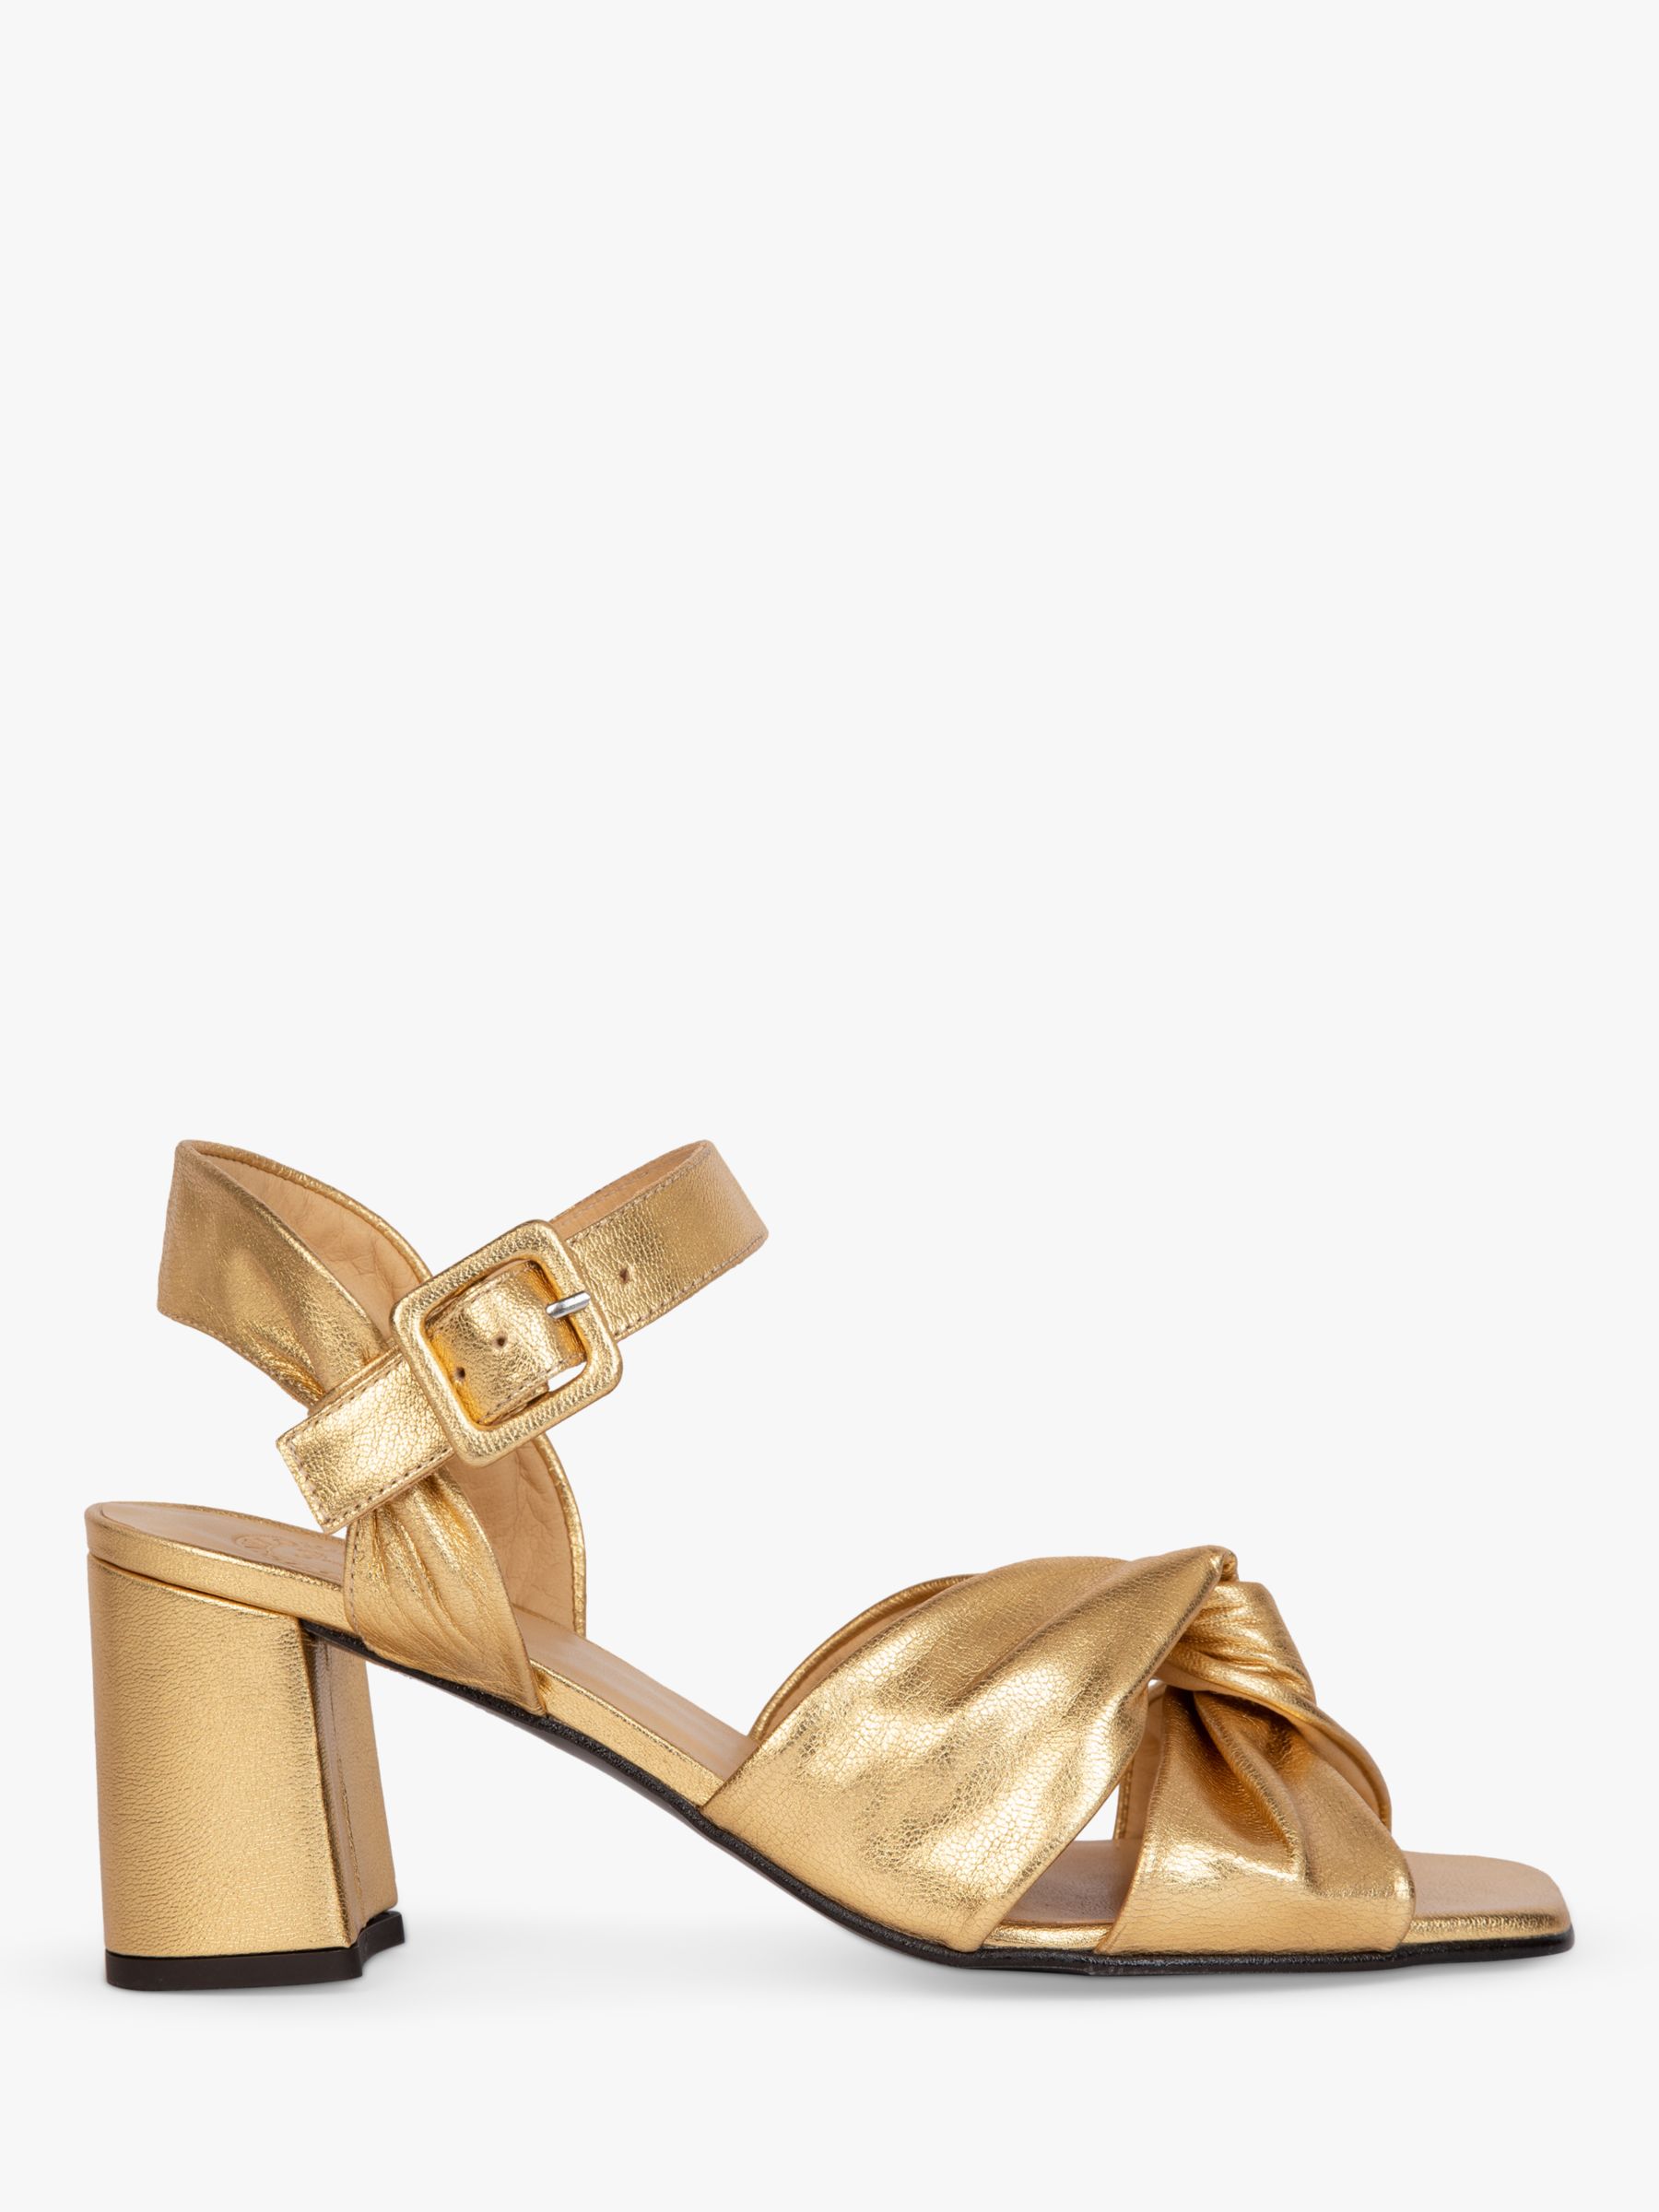 Buy Penelope Chilvers Infinity Leather Block Heel Sandals, Gold Online at johnlewis.com